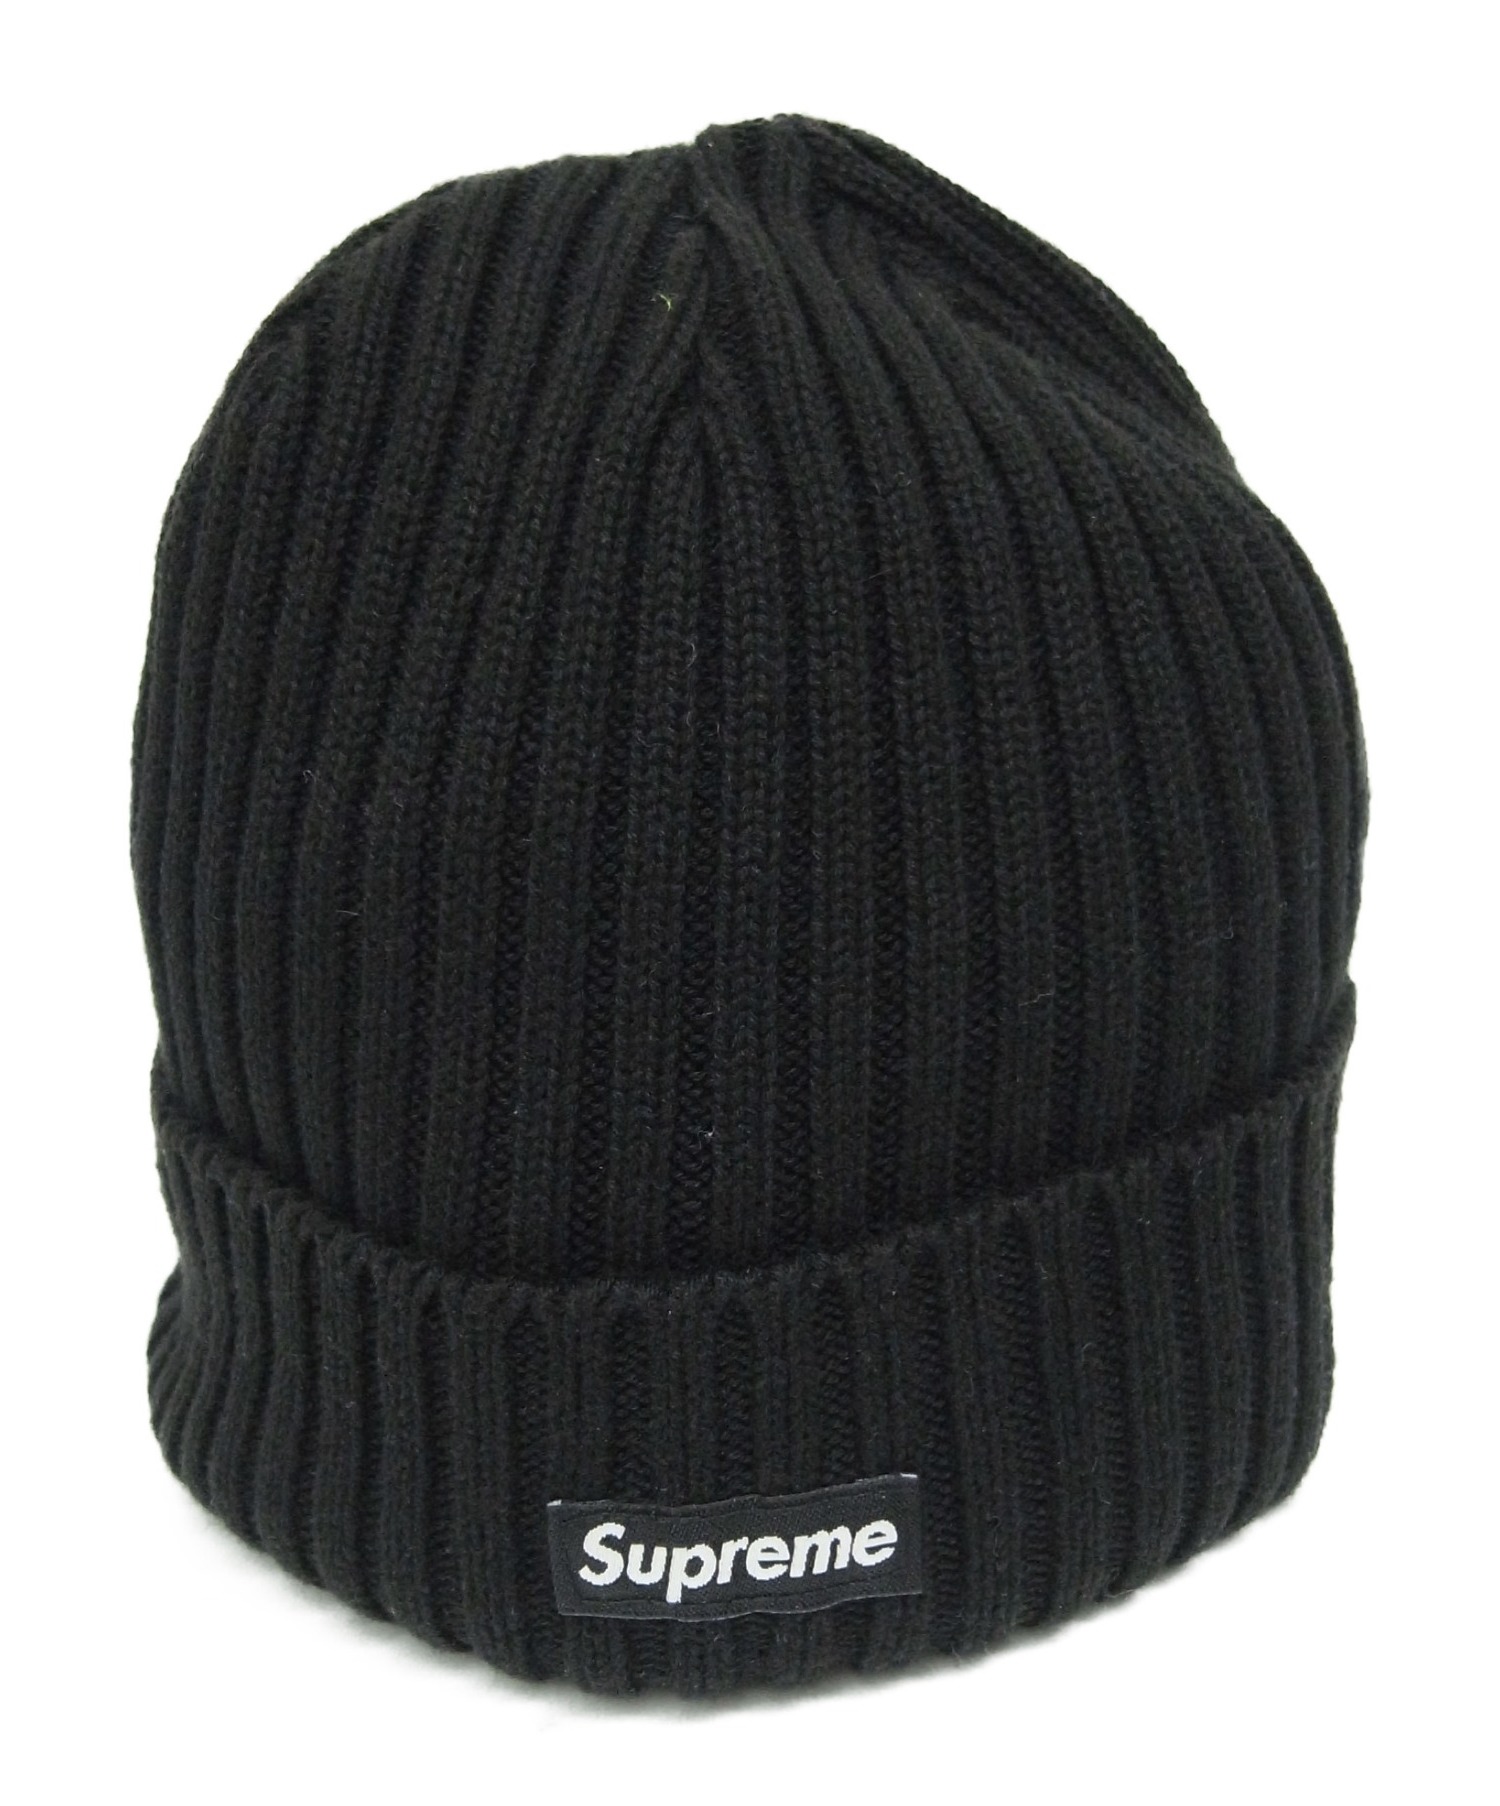 Supreme (シュプリーム) ビーニーニット帽 ブラック サイズ:下記参照 20SSモデル Overdyed Beanie